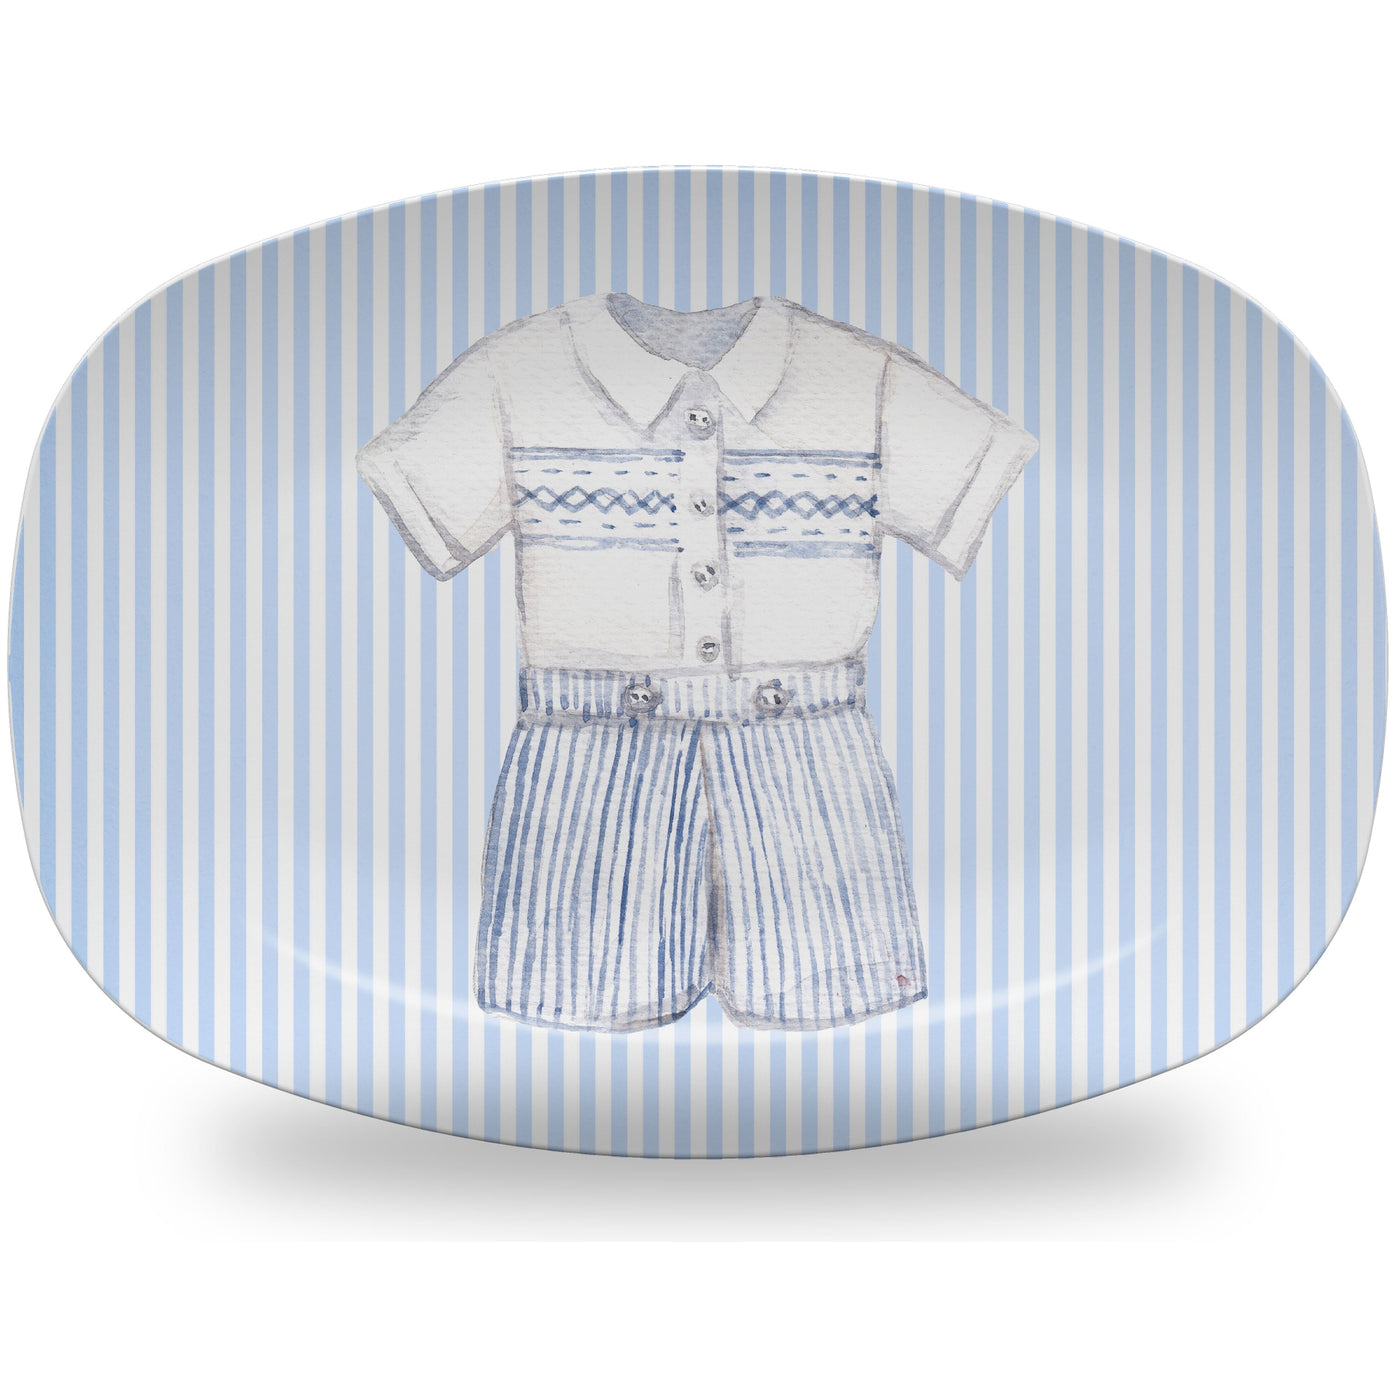 Thermosaf Dinnerware - William Buster Suit (Babies + Kids) - Platter